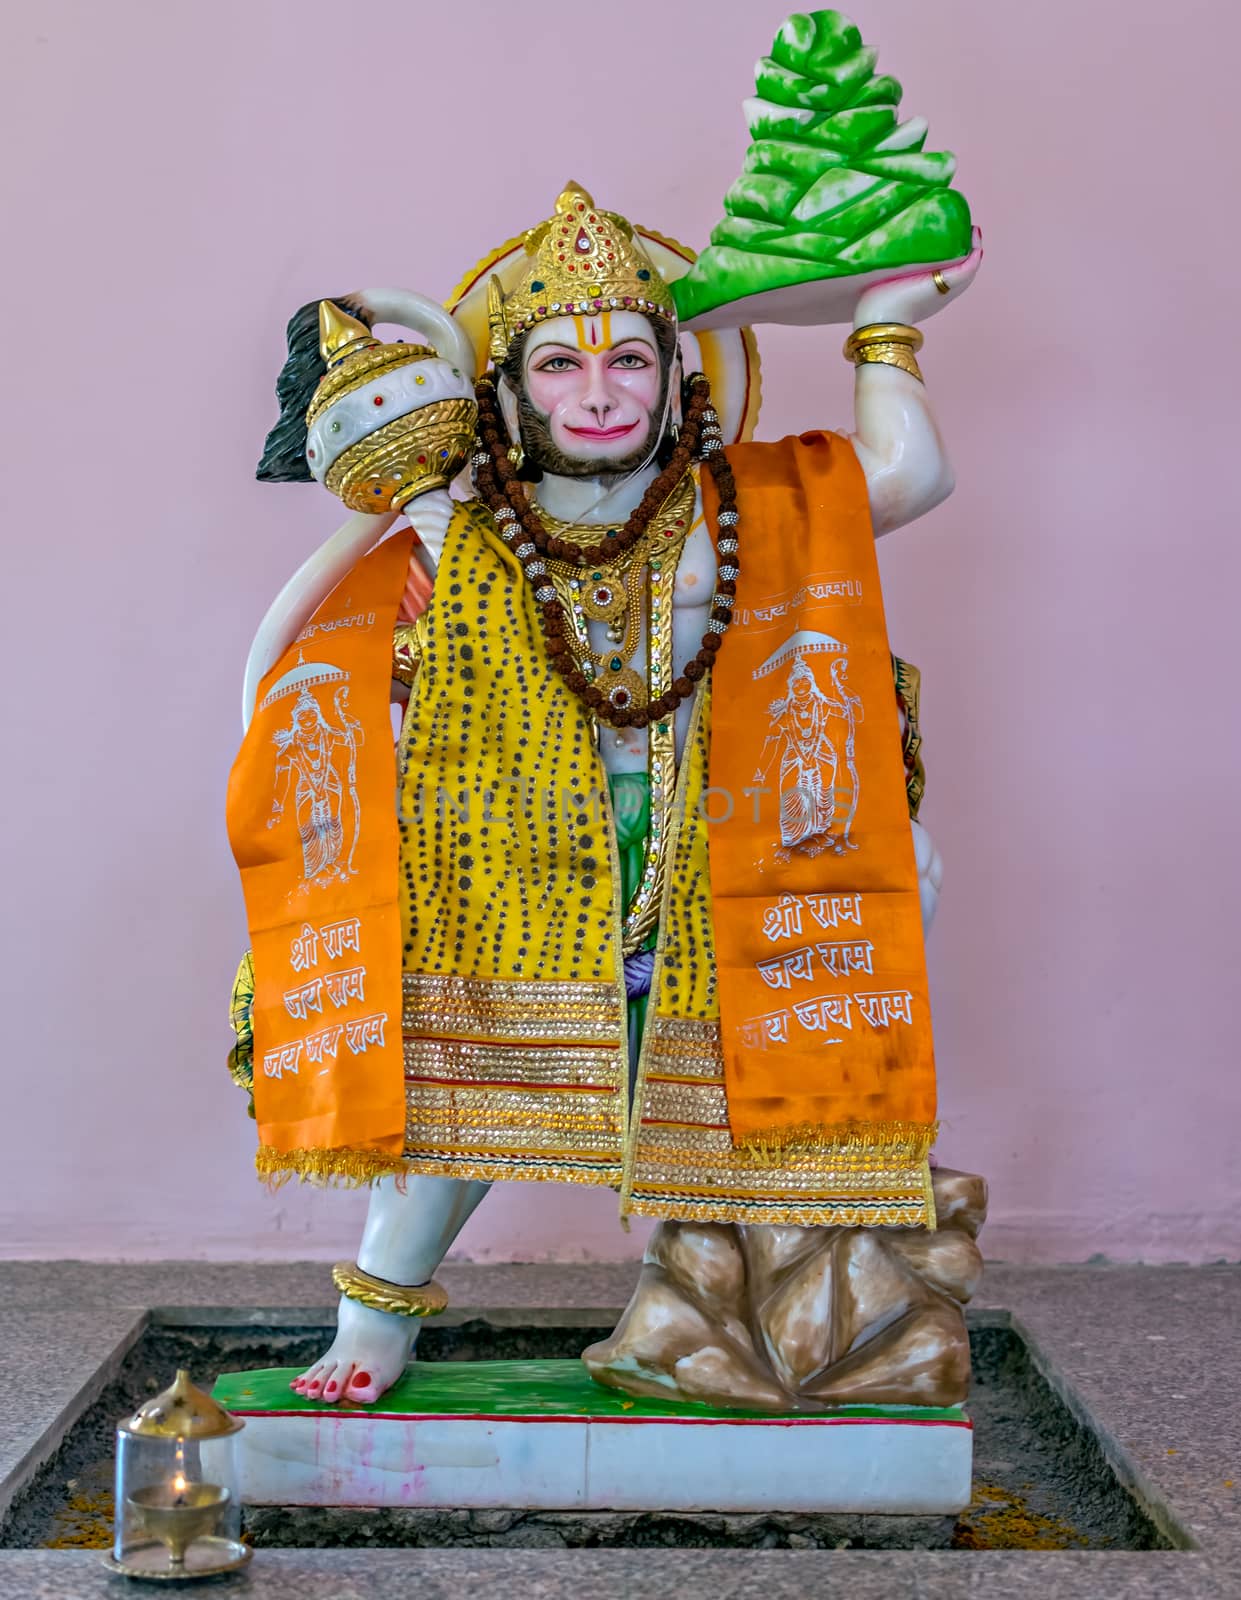 Nicely decorated Idol of Hindu God Hanuman in a temple at Yavatmal, Maharashtra, India.